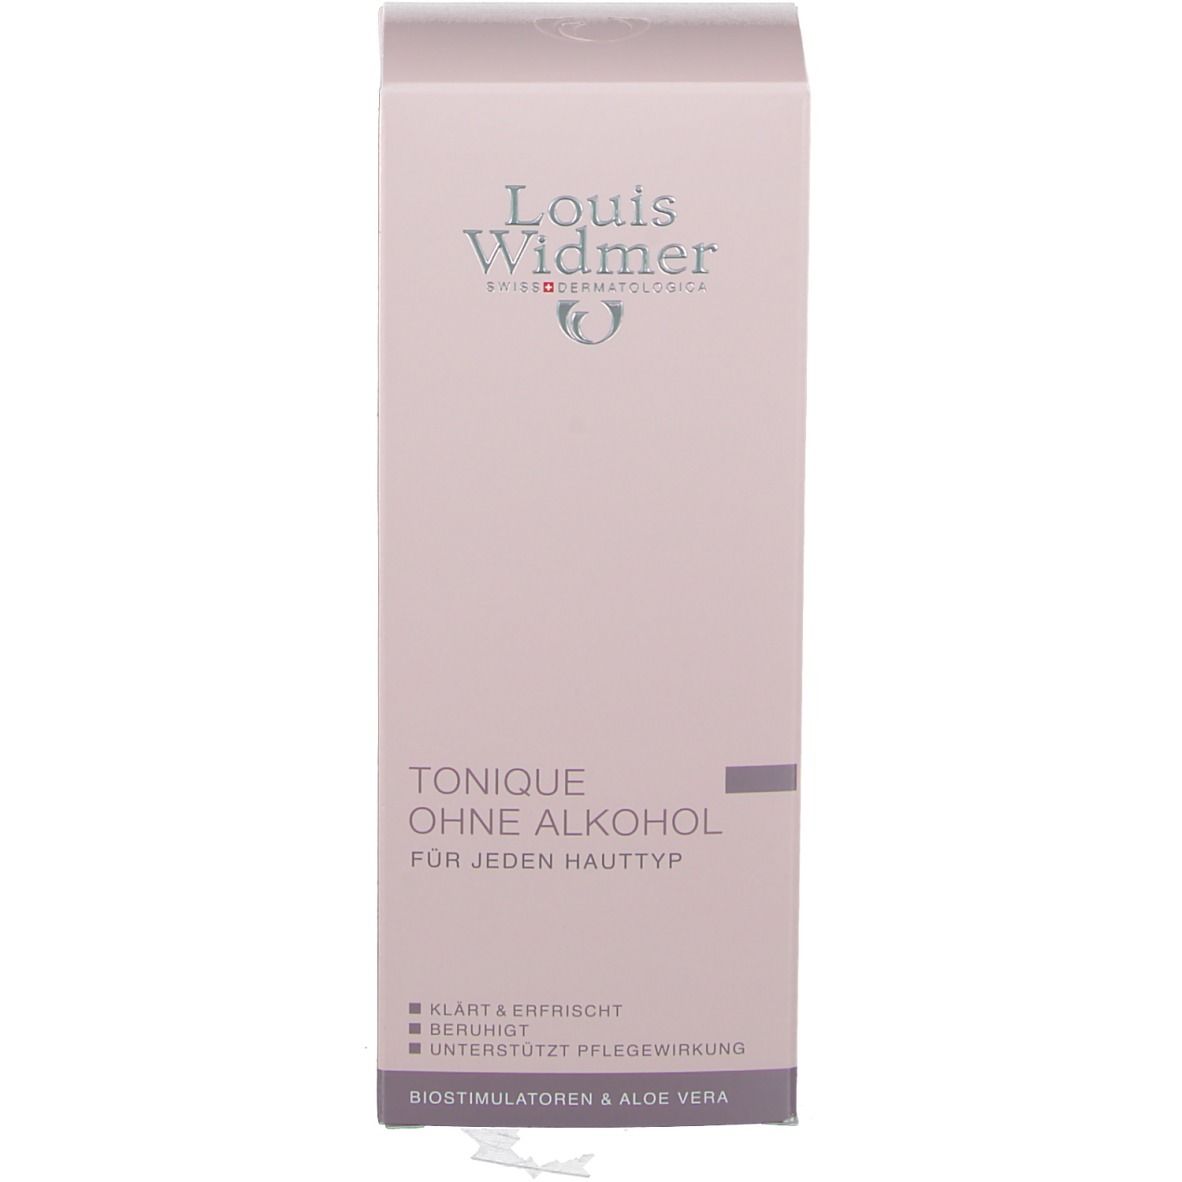 Louis Widmer Tonique ohne Alkohol leicht parfümiert